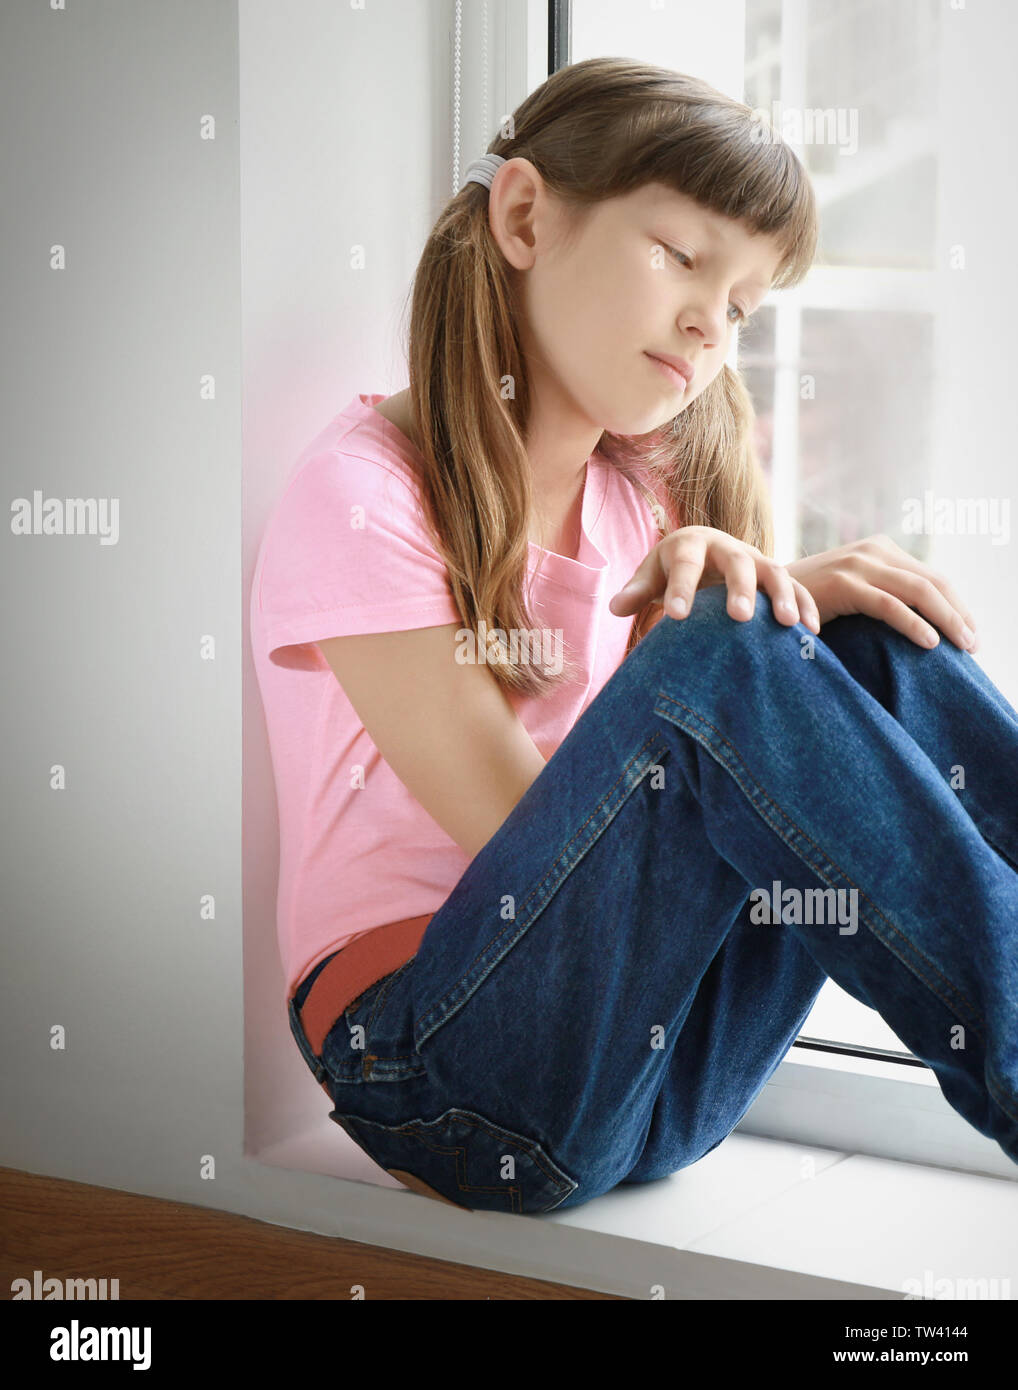 Sad little girl sitting on window sill at home Stock Photo - Alamy